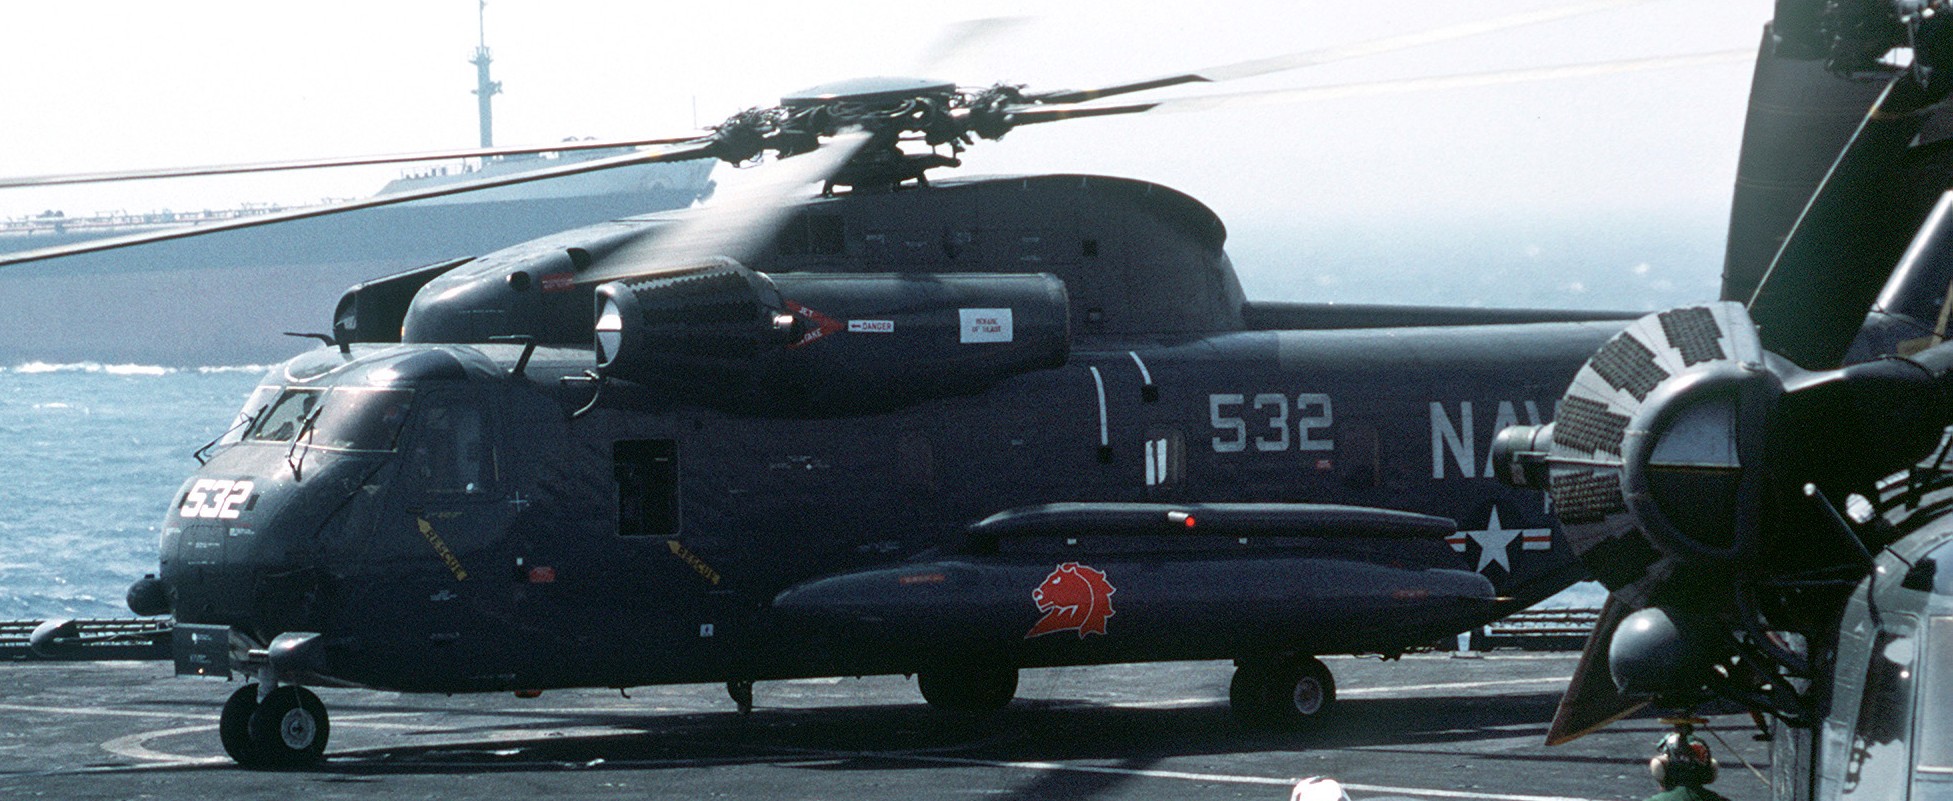 hm-14 vanguard helicopter mine countermeasures squadron navy rh-53d sea stallion 97